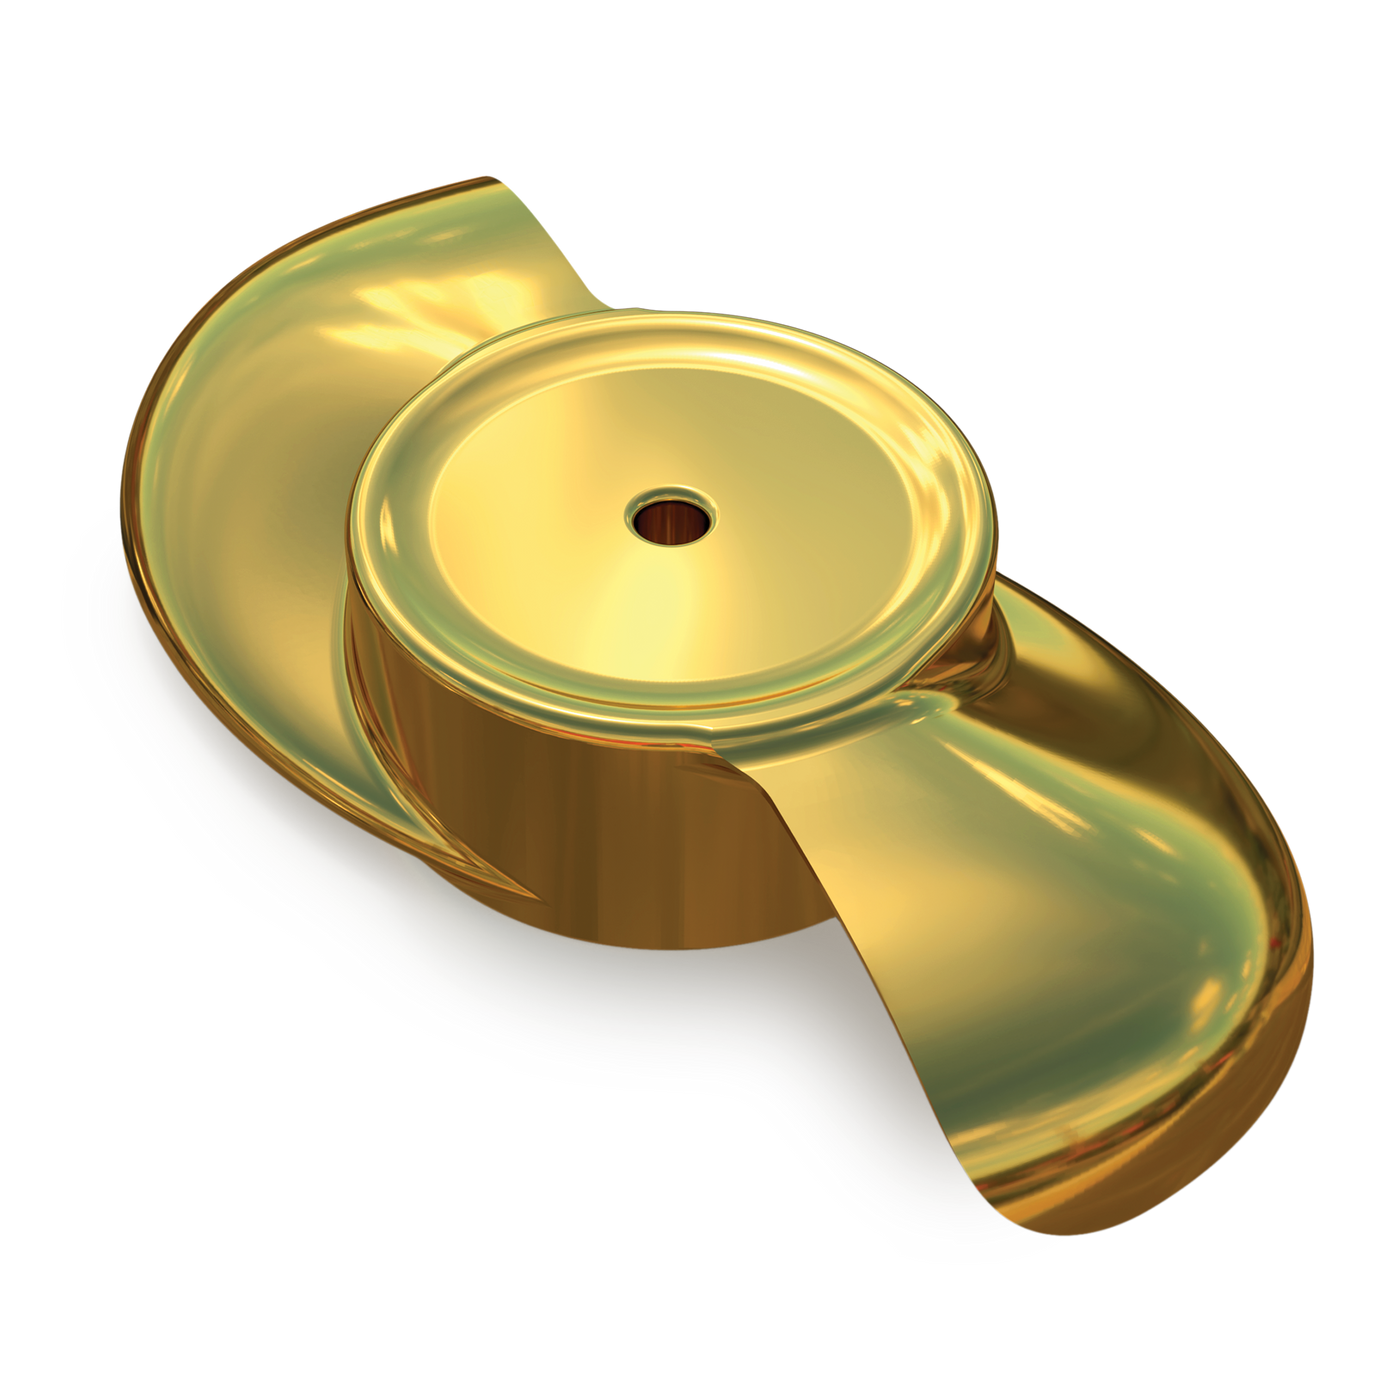 Gold metallic polymer trolling propeller - Maelstrom Eddy in color Victorian